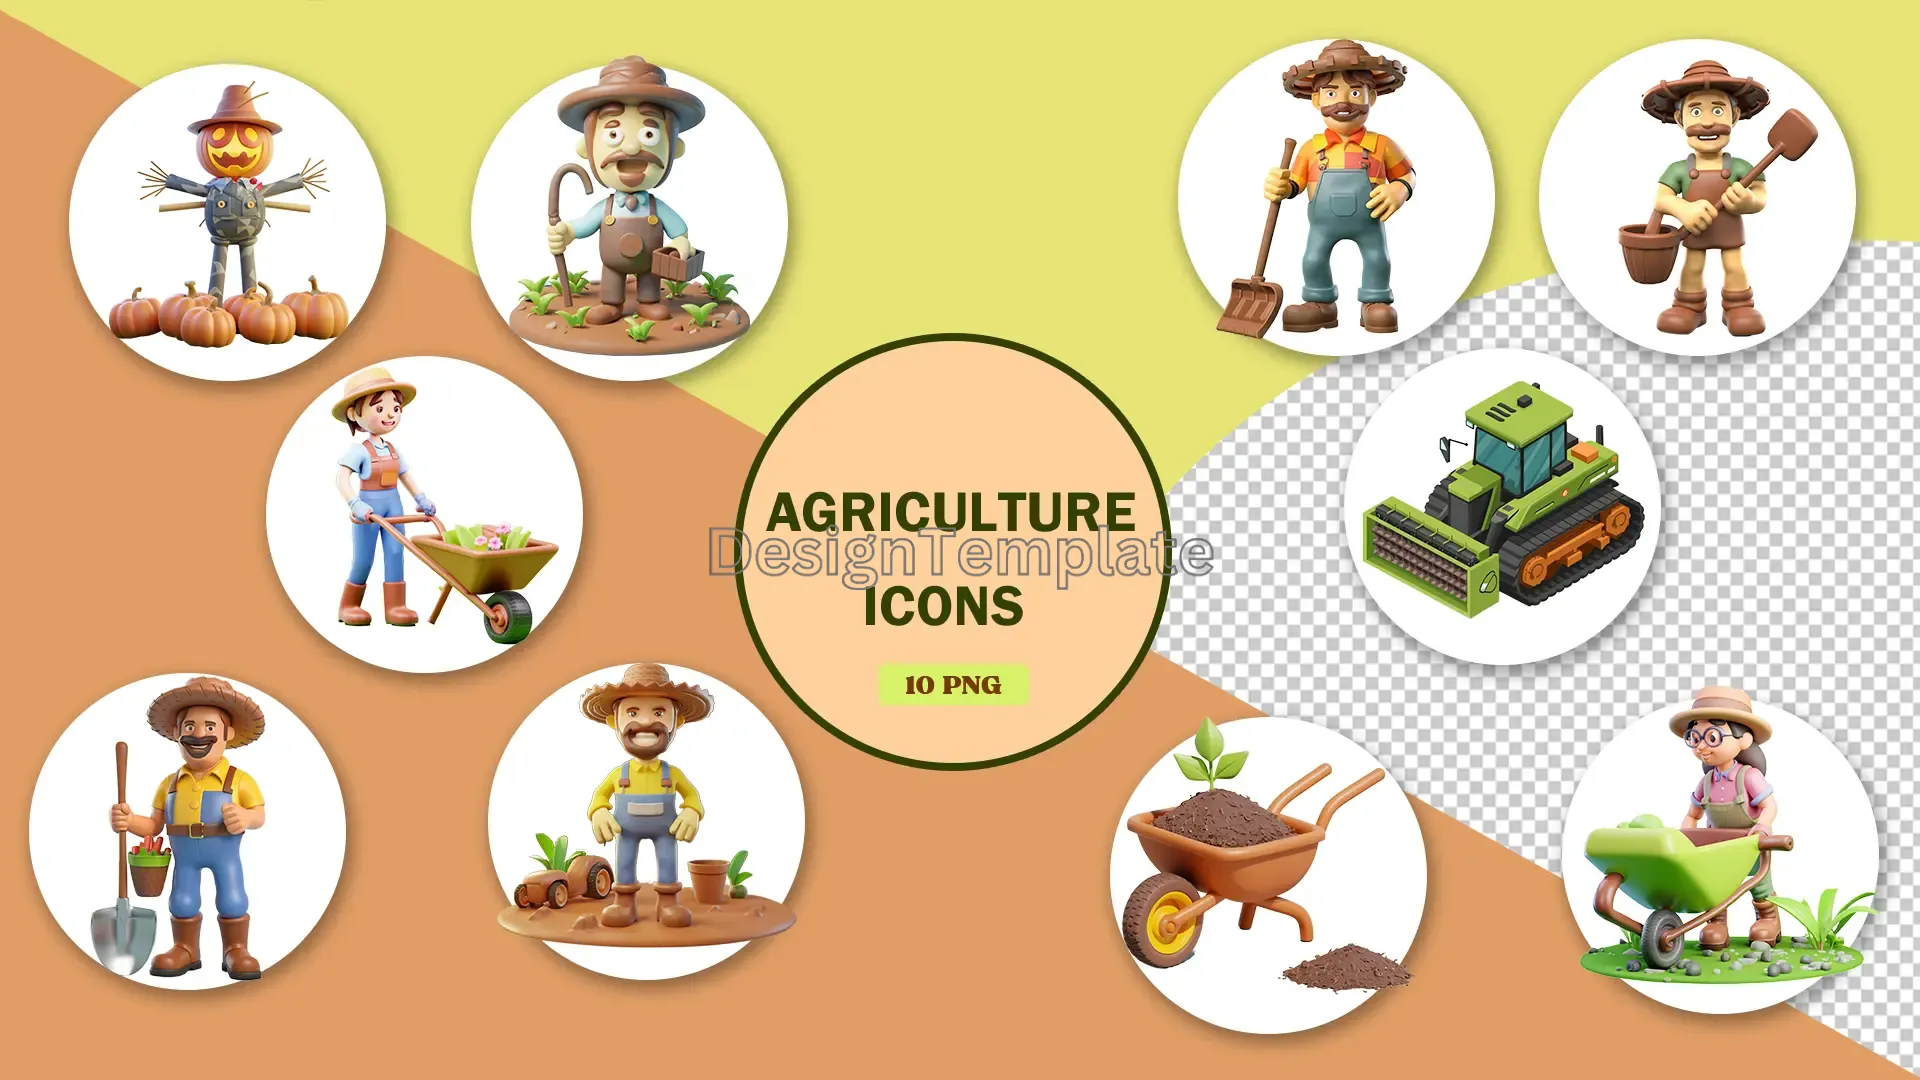 Farming Icons 3D Elements Pack